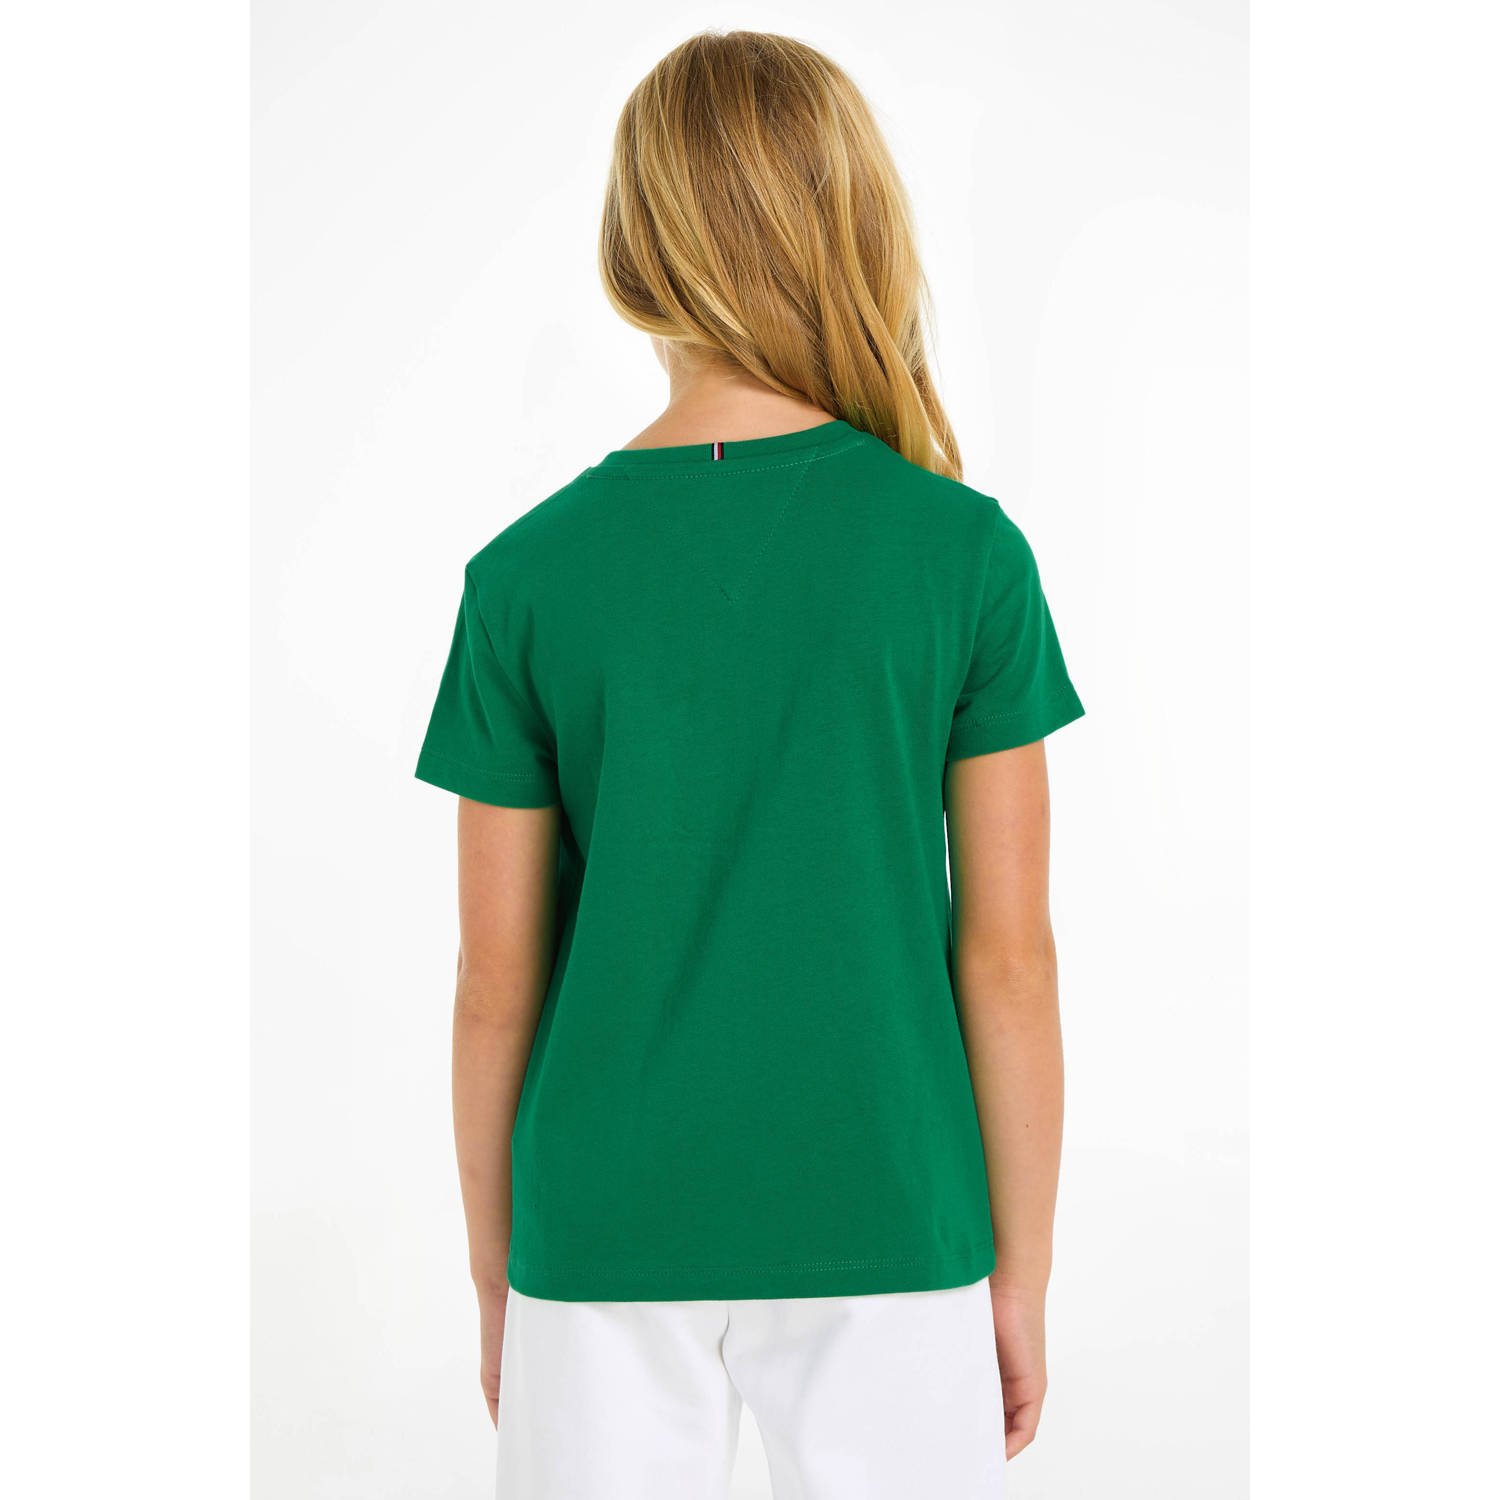 Tommy Hilfiger T-shirt met tekst groen